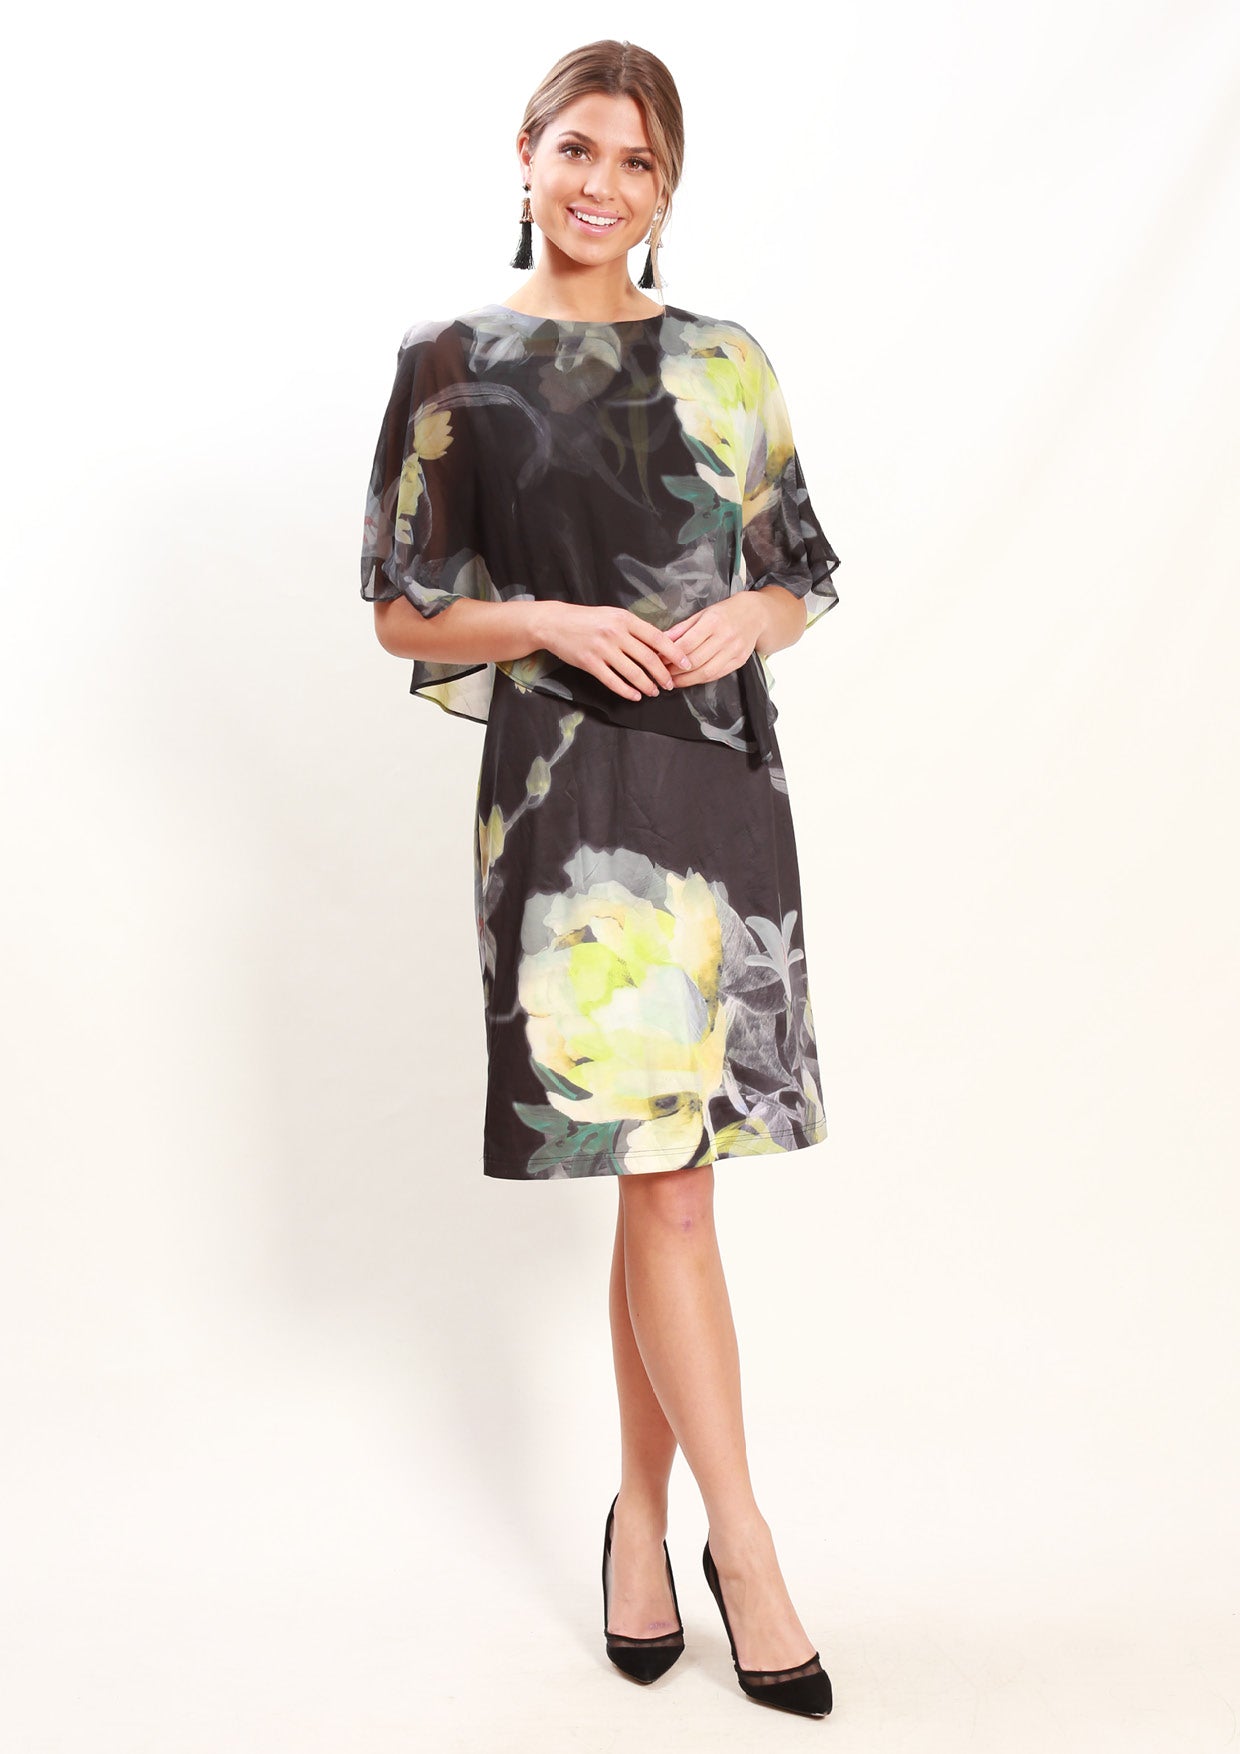 LA0125NC Chiffon Floral Dress (Pack)